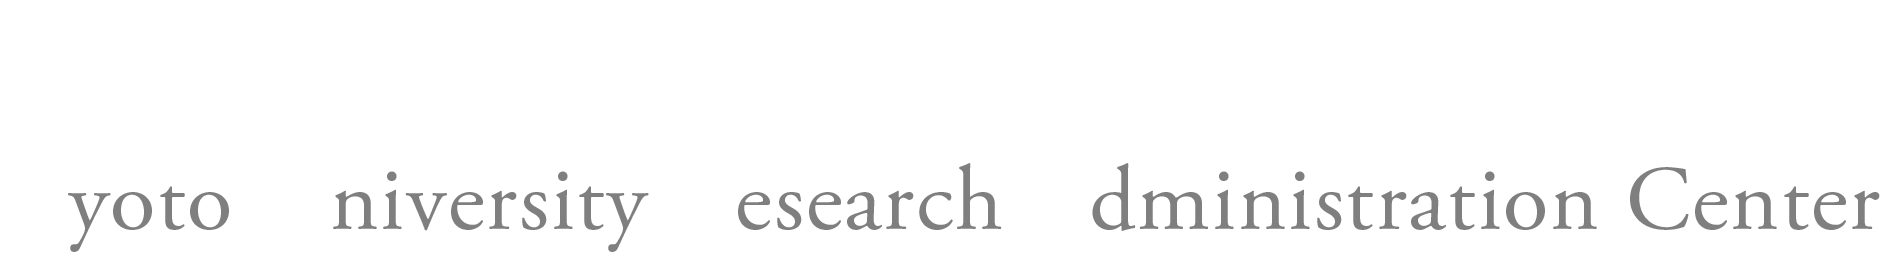 京都大学 学術研究支援室 Kyoto University Research Administration